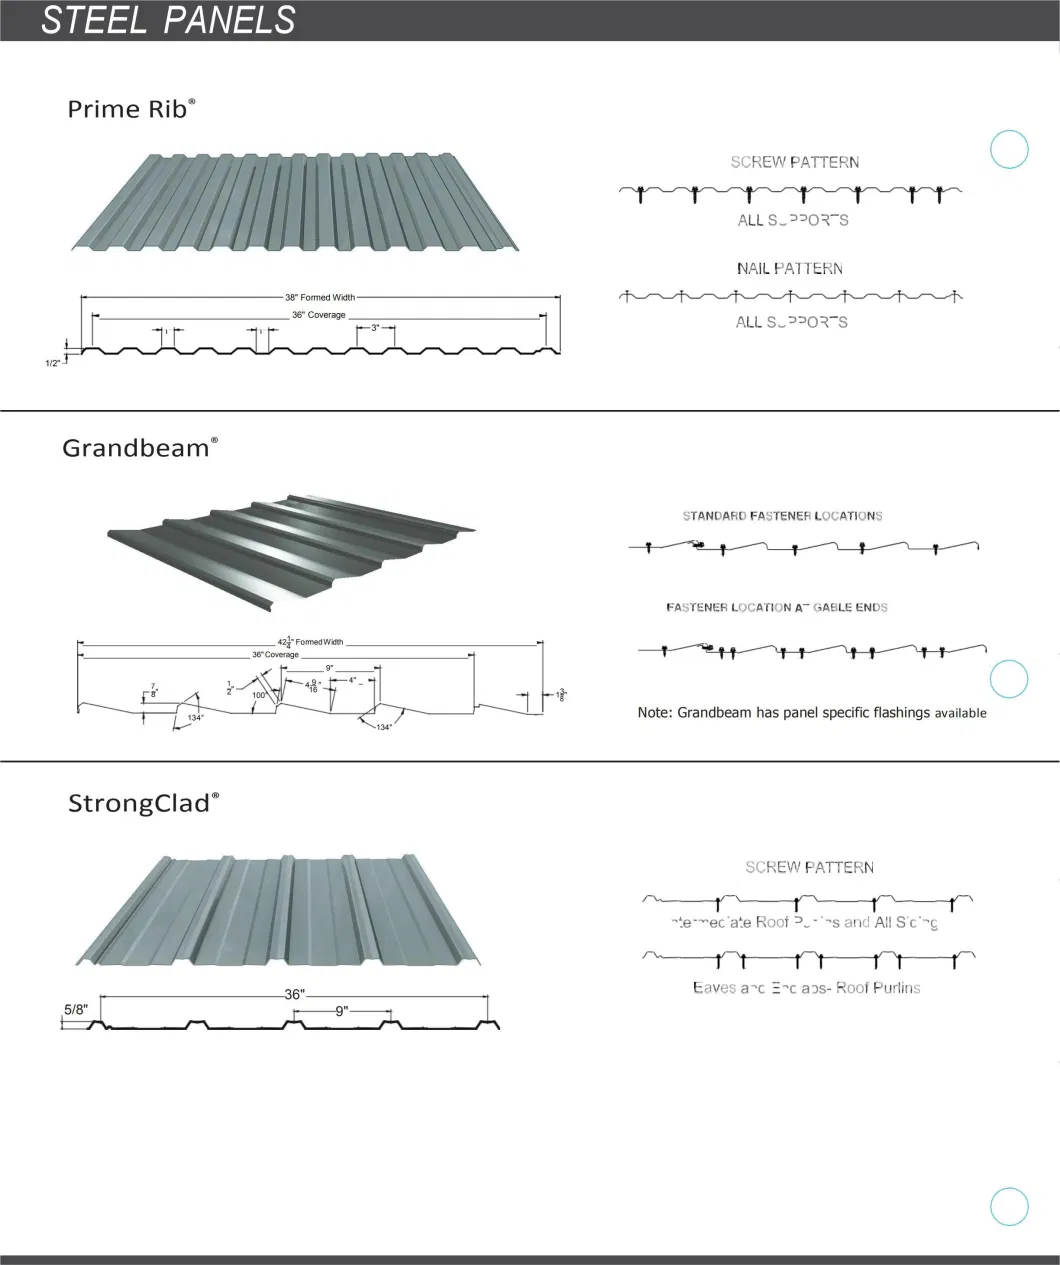 PPGI/PPGL/Dx51d/Dx52D/Dx53D Az150 Galvanized/Prepainted/Gi/Color Coated Steel Roofing Corrugated Sheet Aluminium Zinc Color Coated Galvanized Roofing Sheet